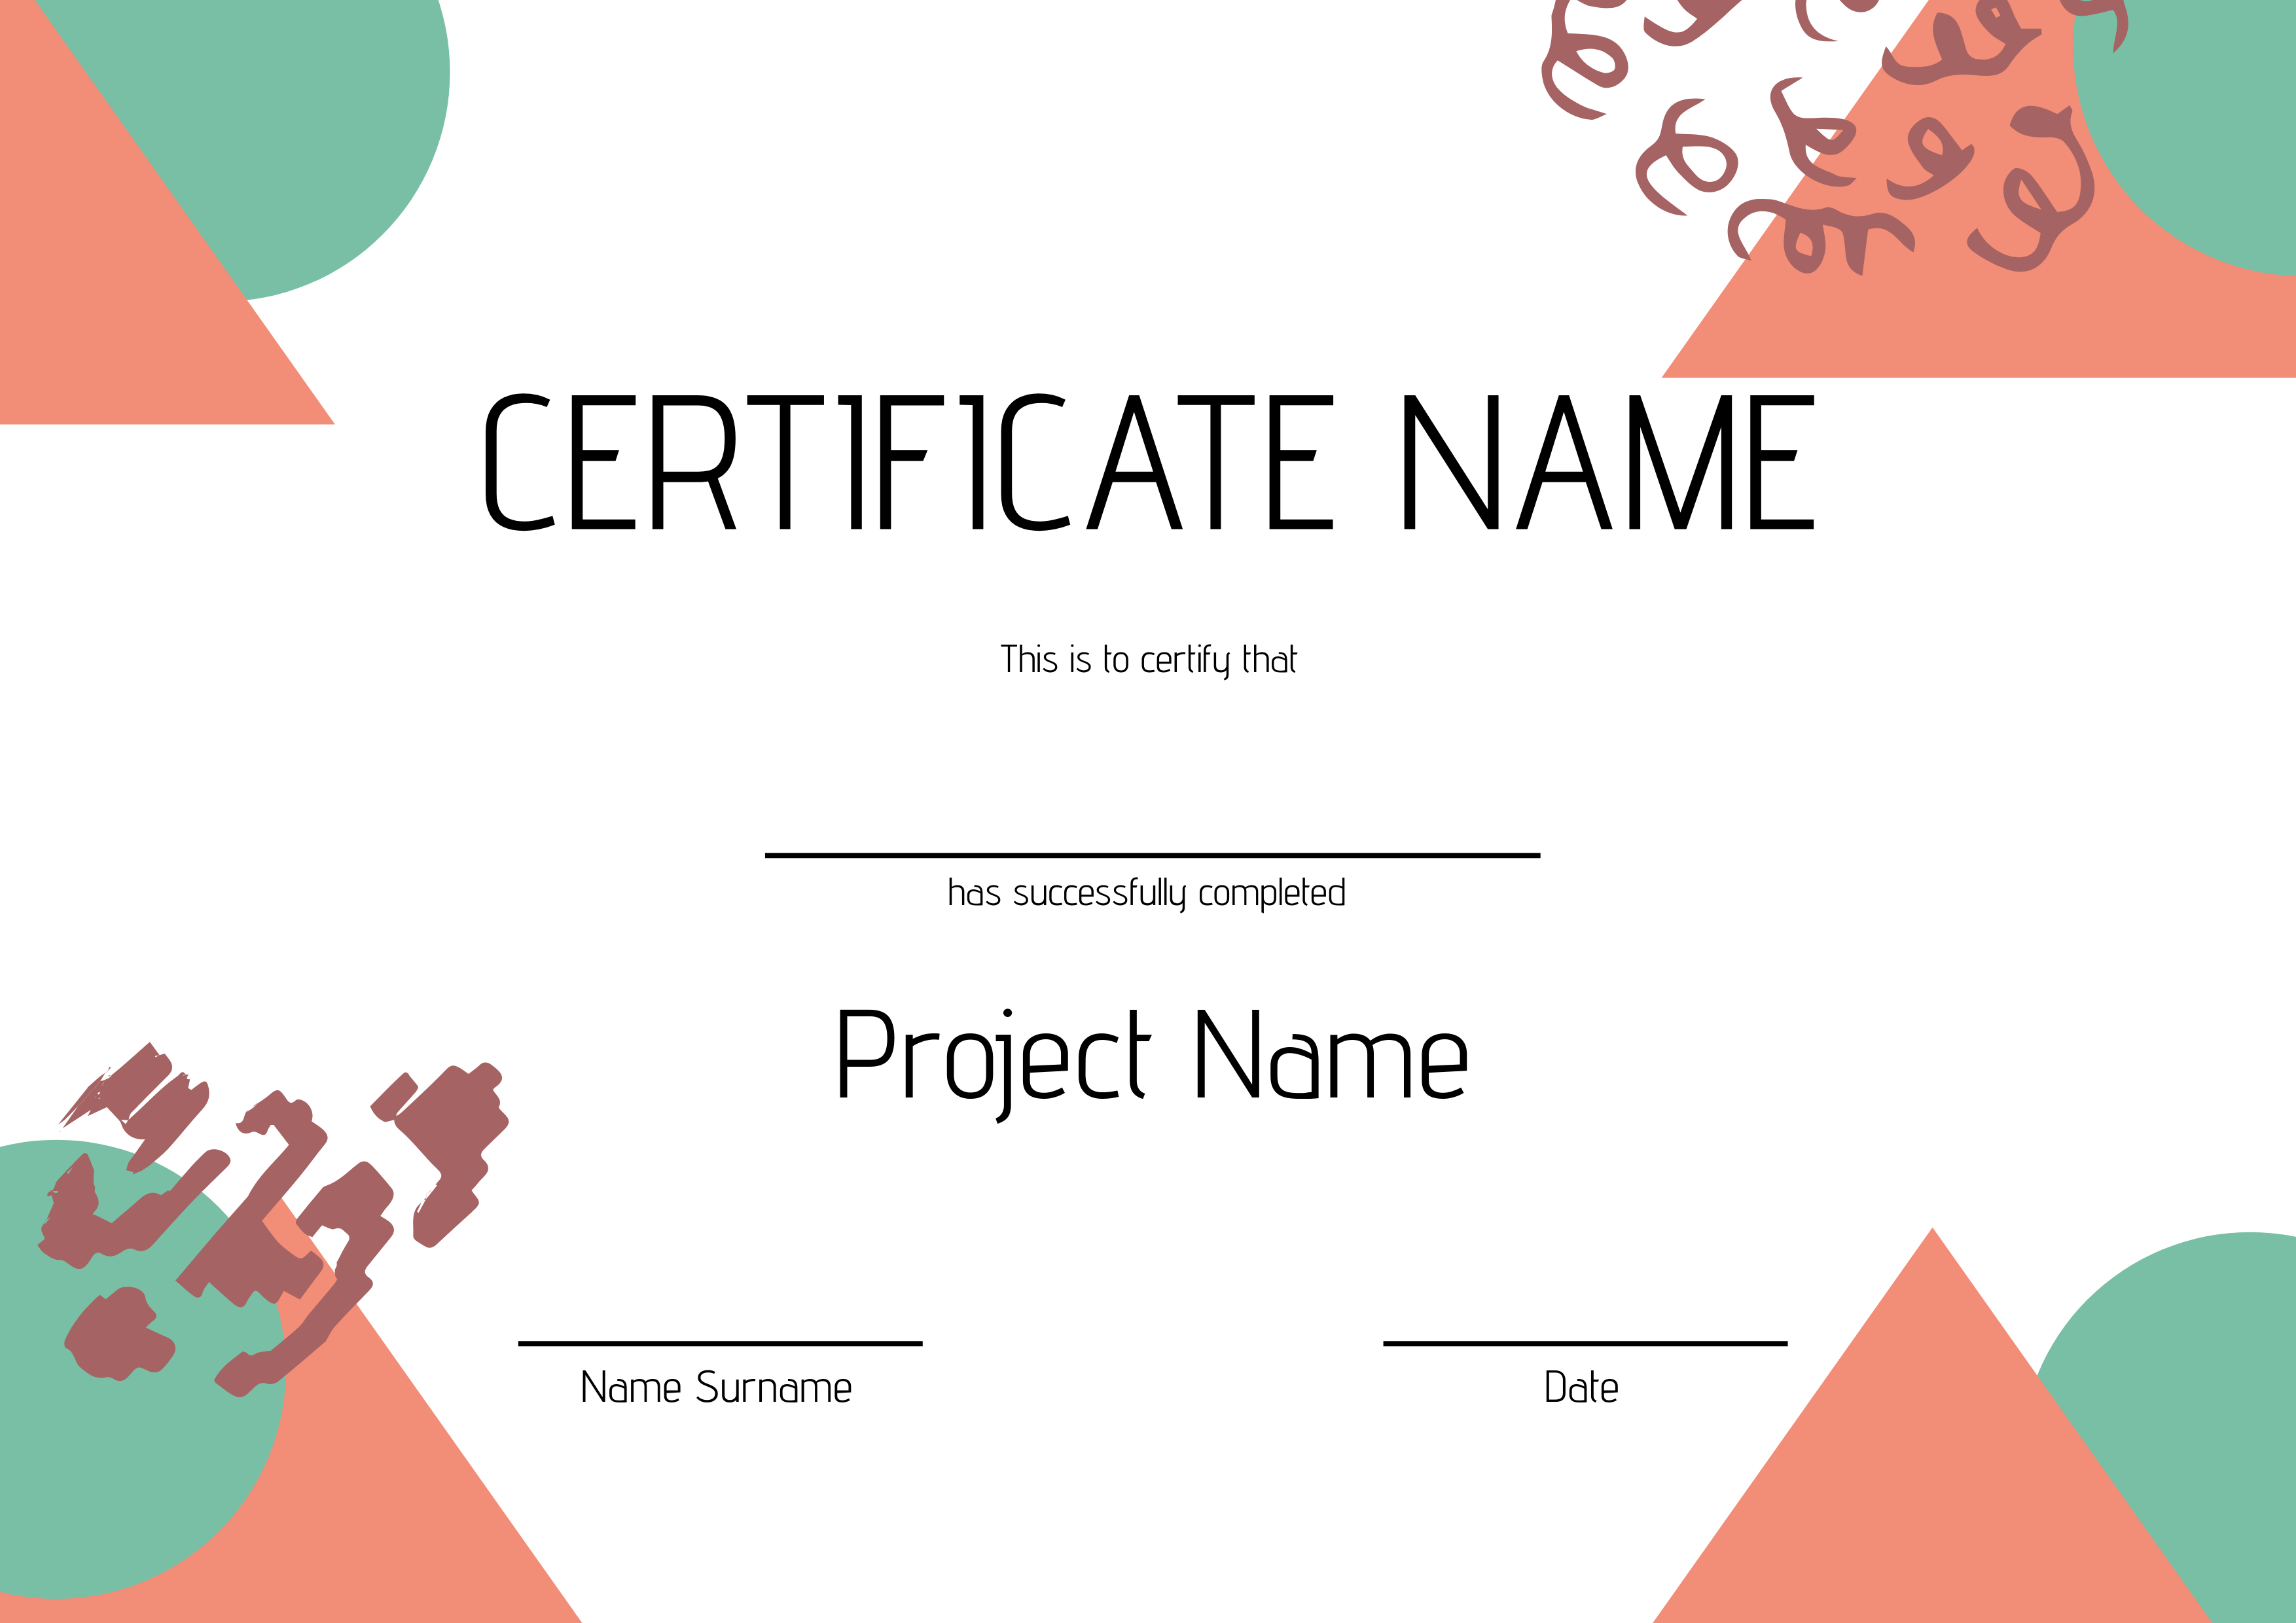 Certificate template - Print and digital design - Image